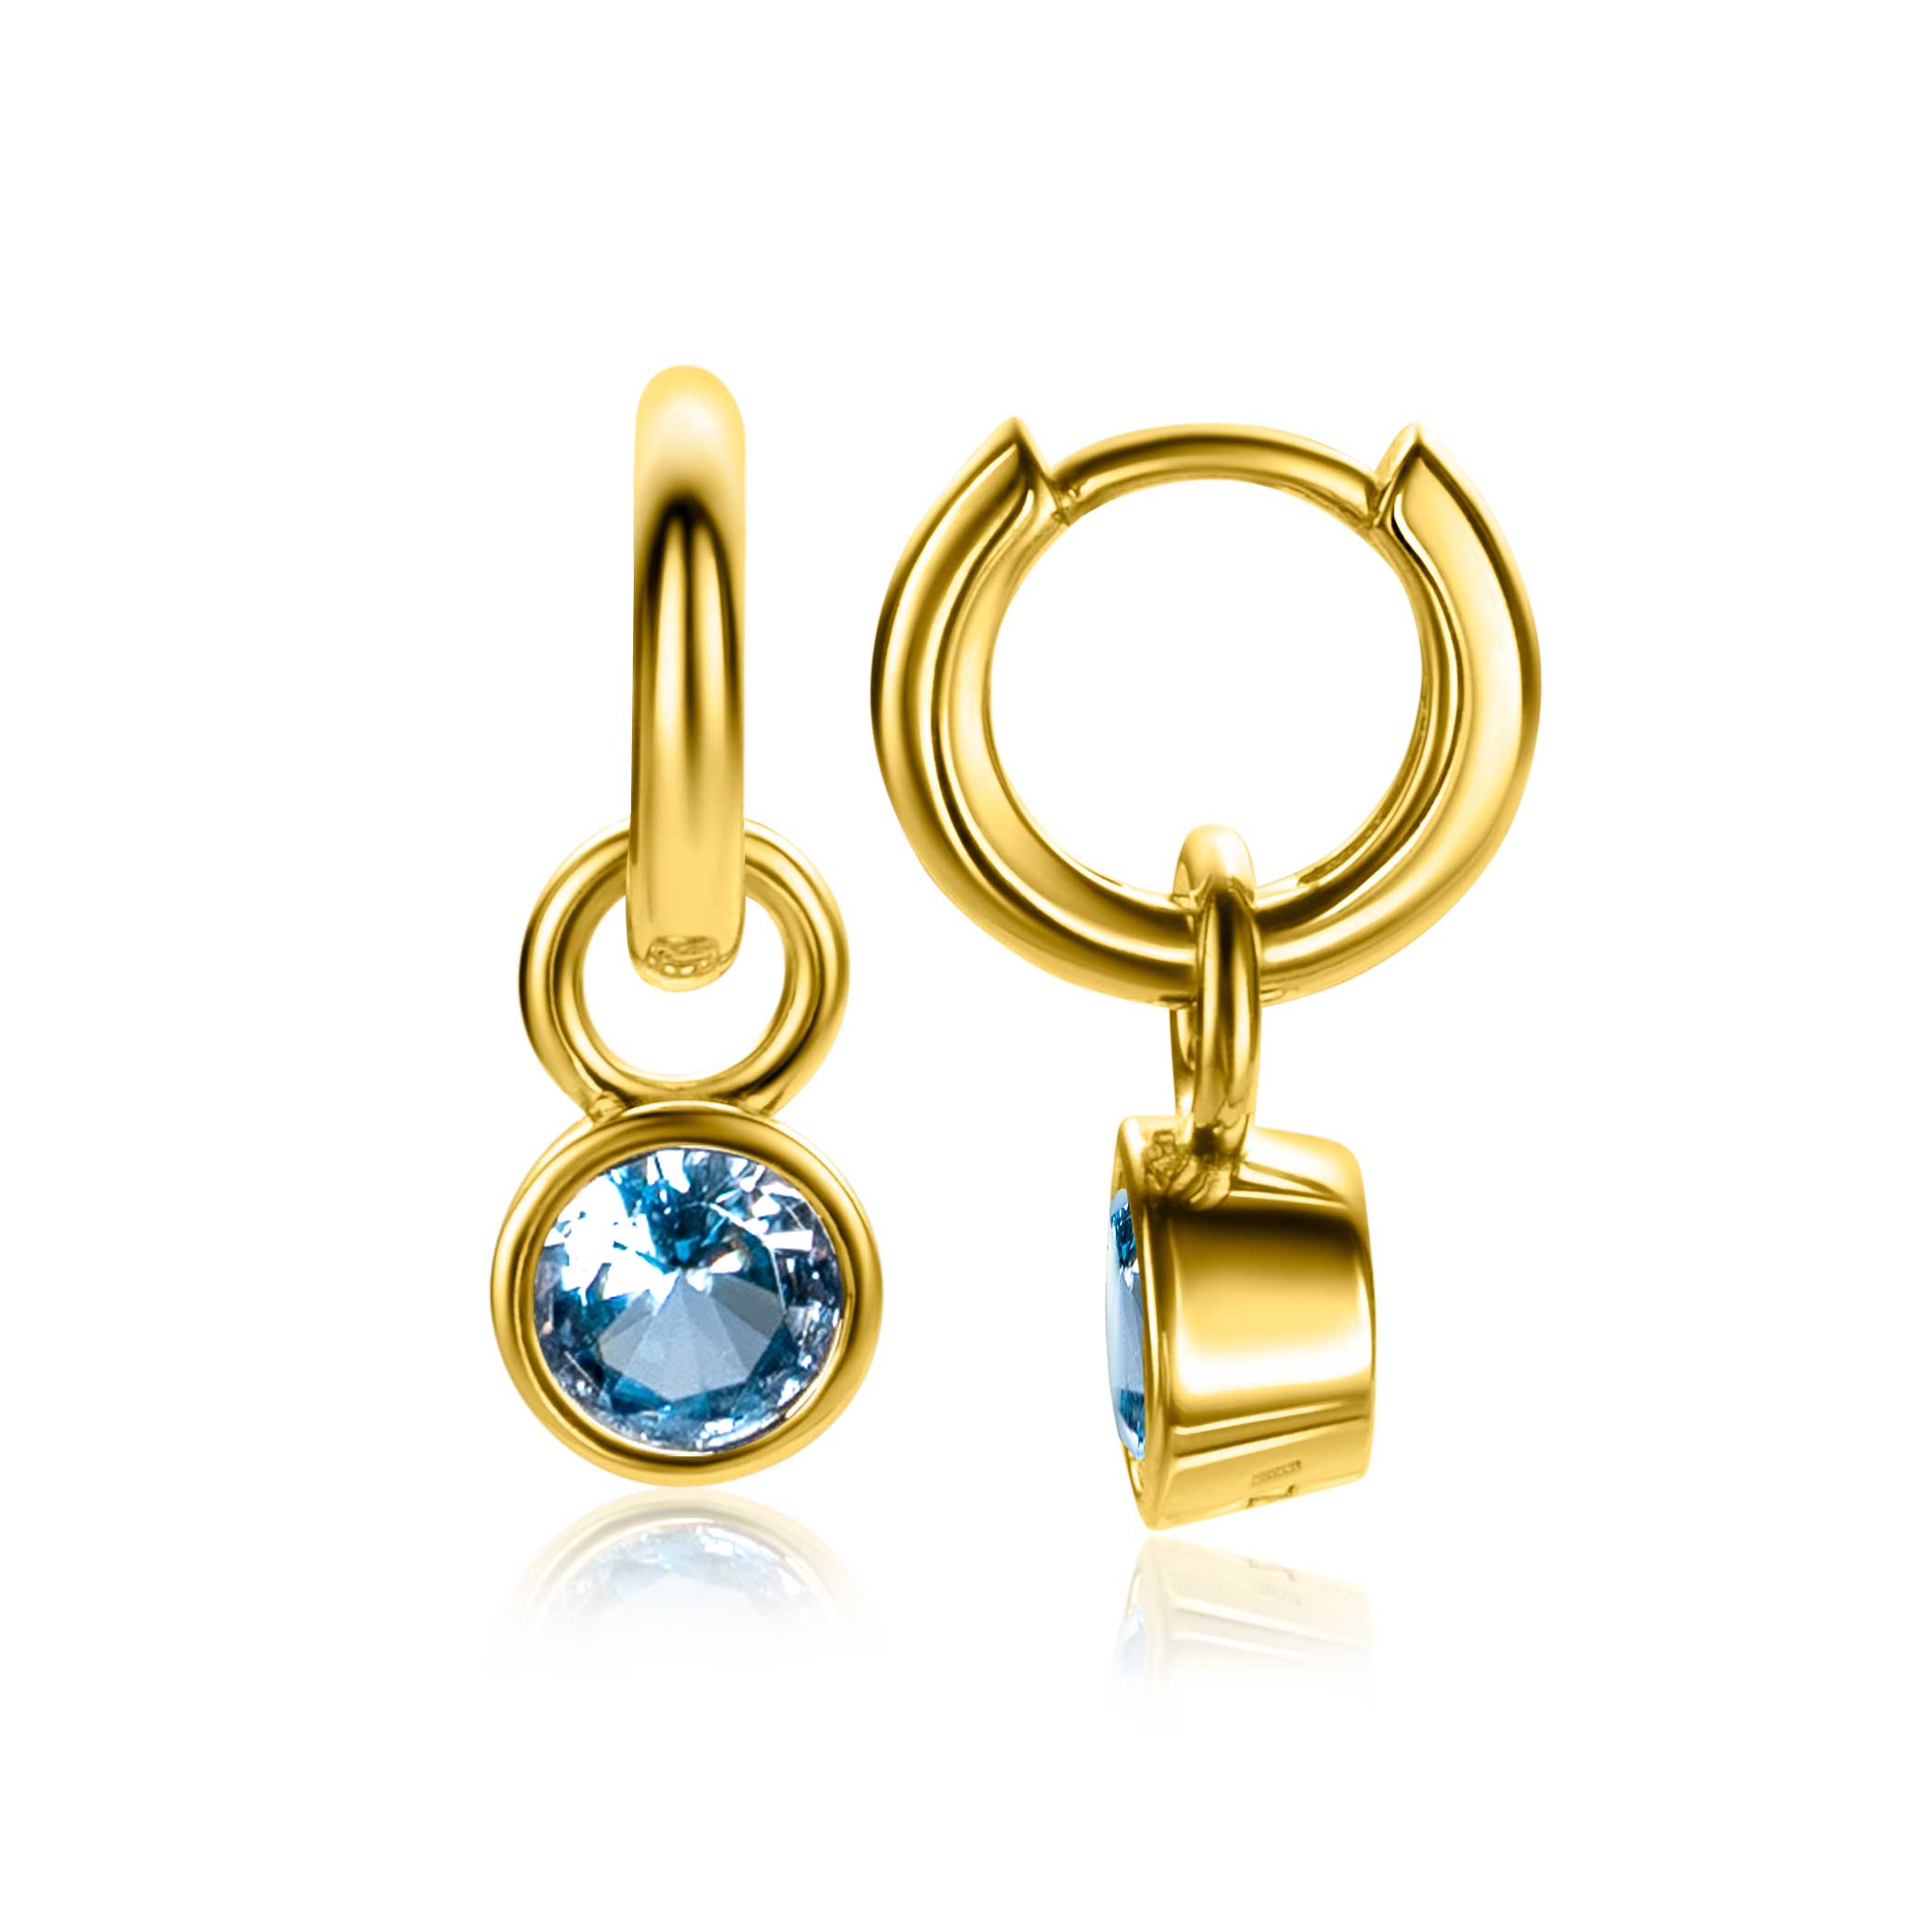 DECEMBER Earrings Pendants Gold Plated with Birthstone Blue Topaz Zirconia (excl. hoop earrings)